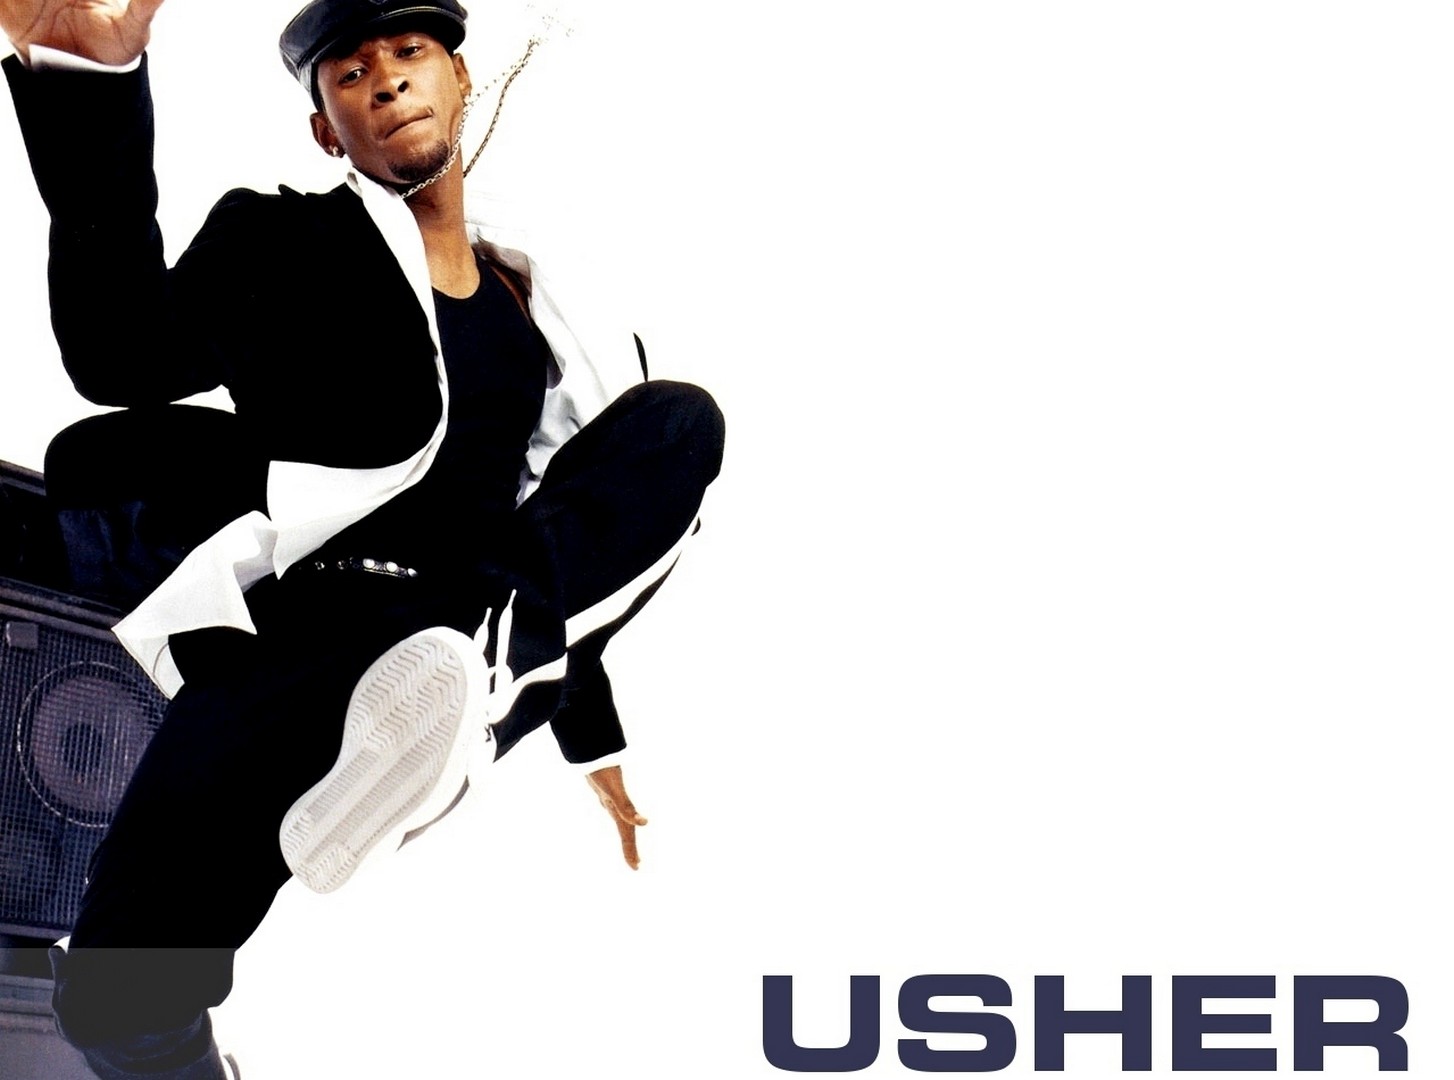 http://1.bp.blogspot.com/-sSJ2yP8ykUs/Tbdg8-R1rTI/AAAAAAAAAbg/8O0f77SfOj8/s1600/Usher-pics-Usher-Usher-Usher-Usher-Usher-Usher-Usher-Usher-Usher-Usher.jpg